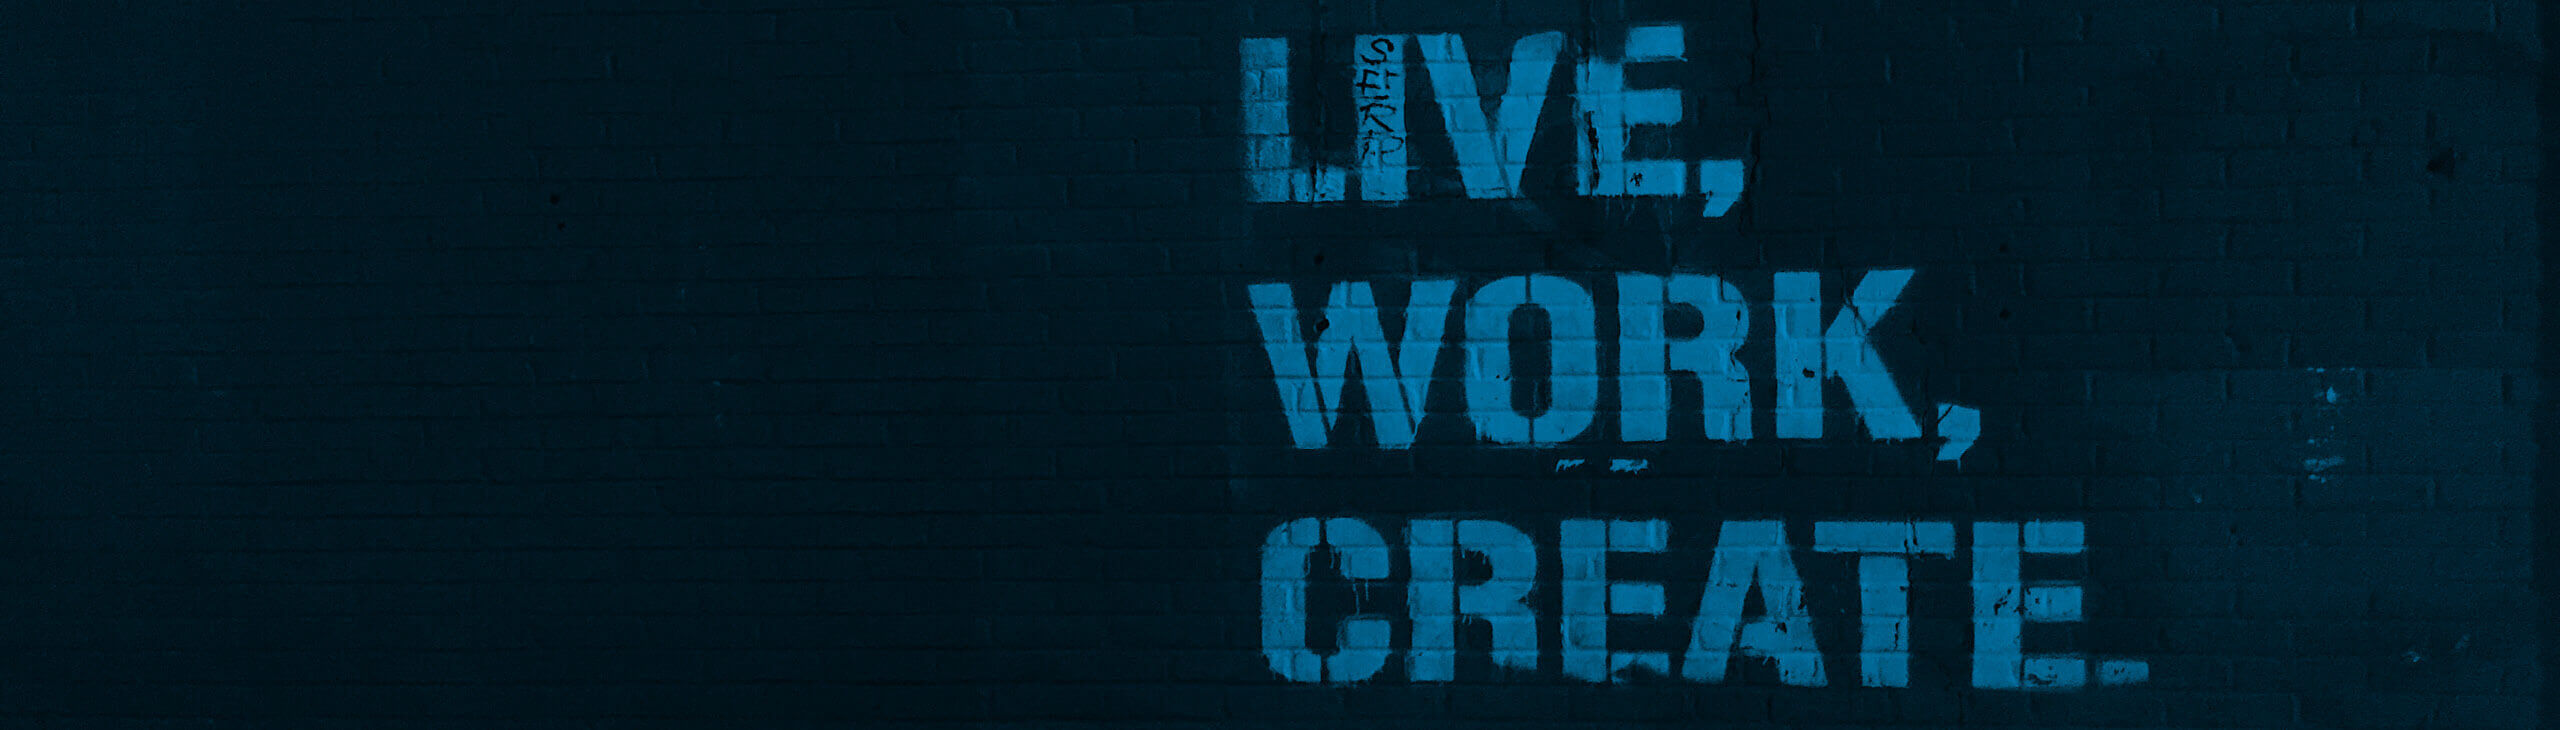 Live, work, create.